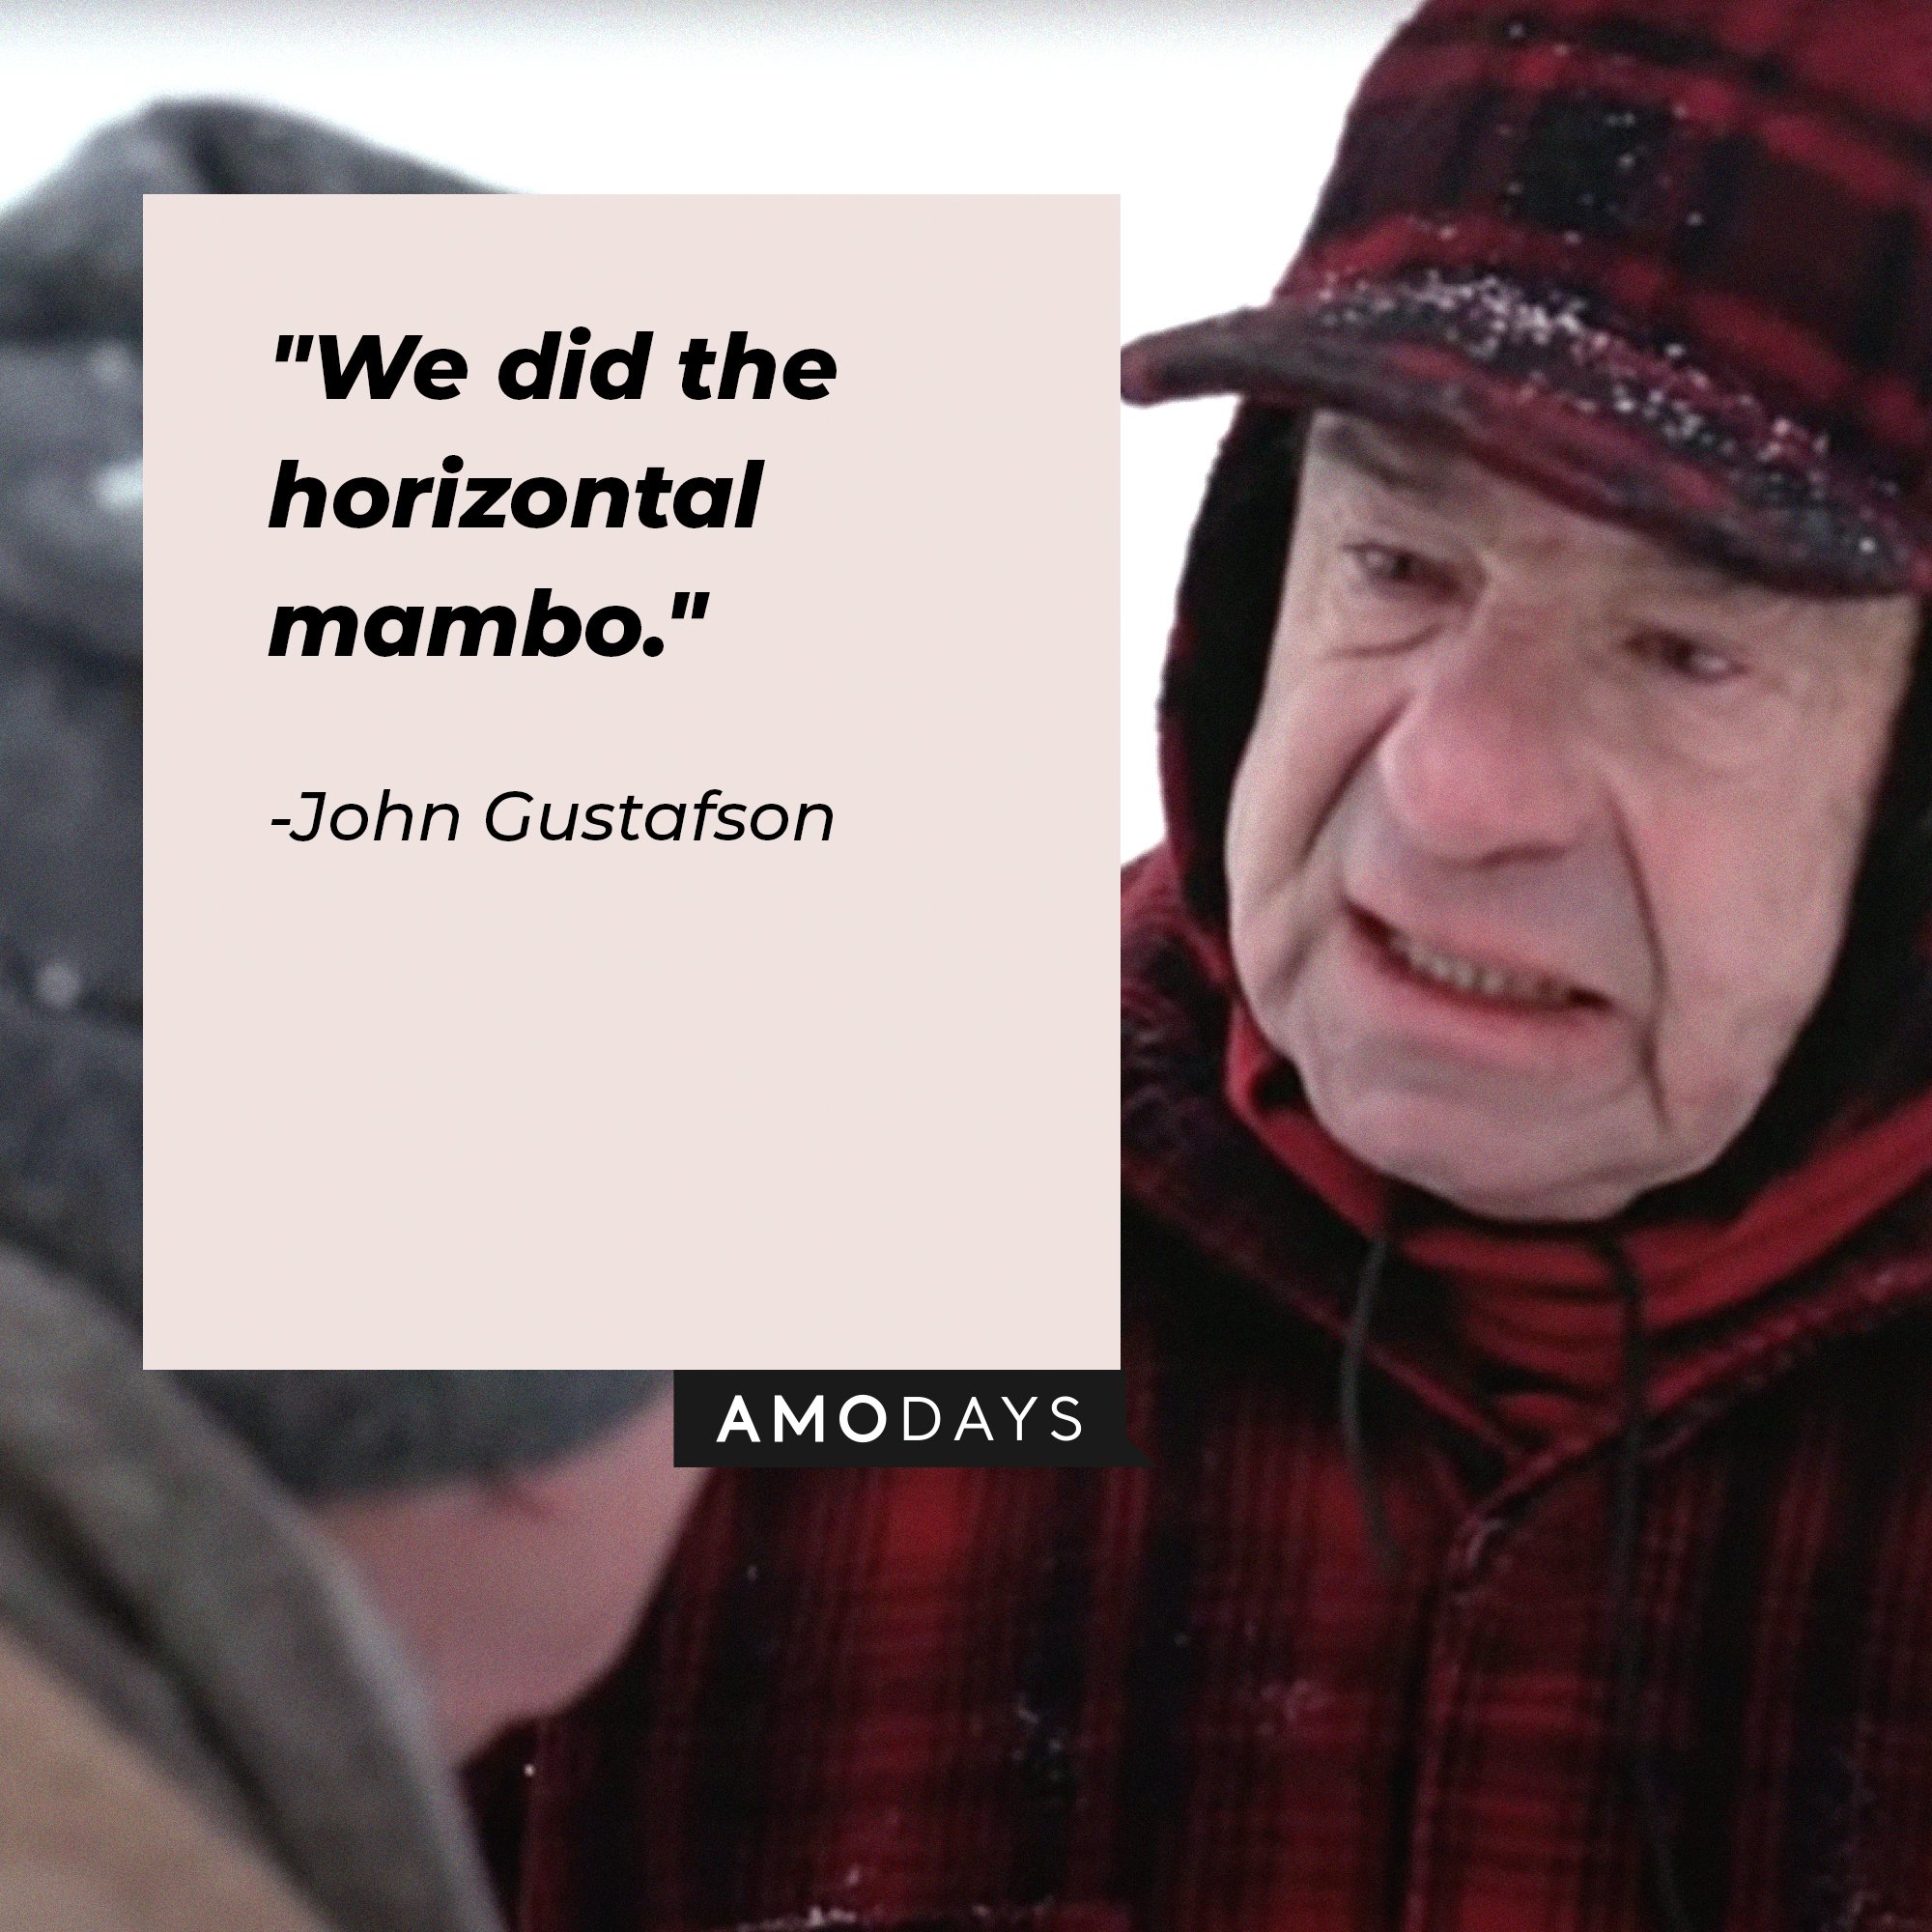 John Gustafson’s quote: "We did the horizontal mambo." | Image: AmoDays